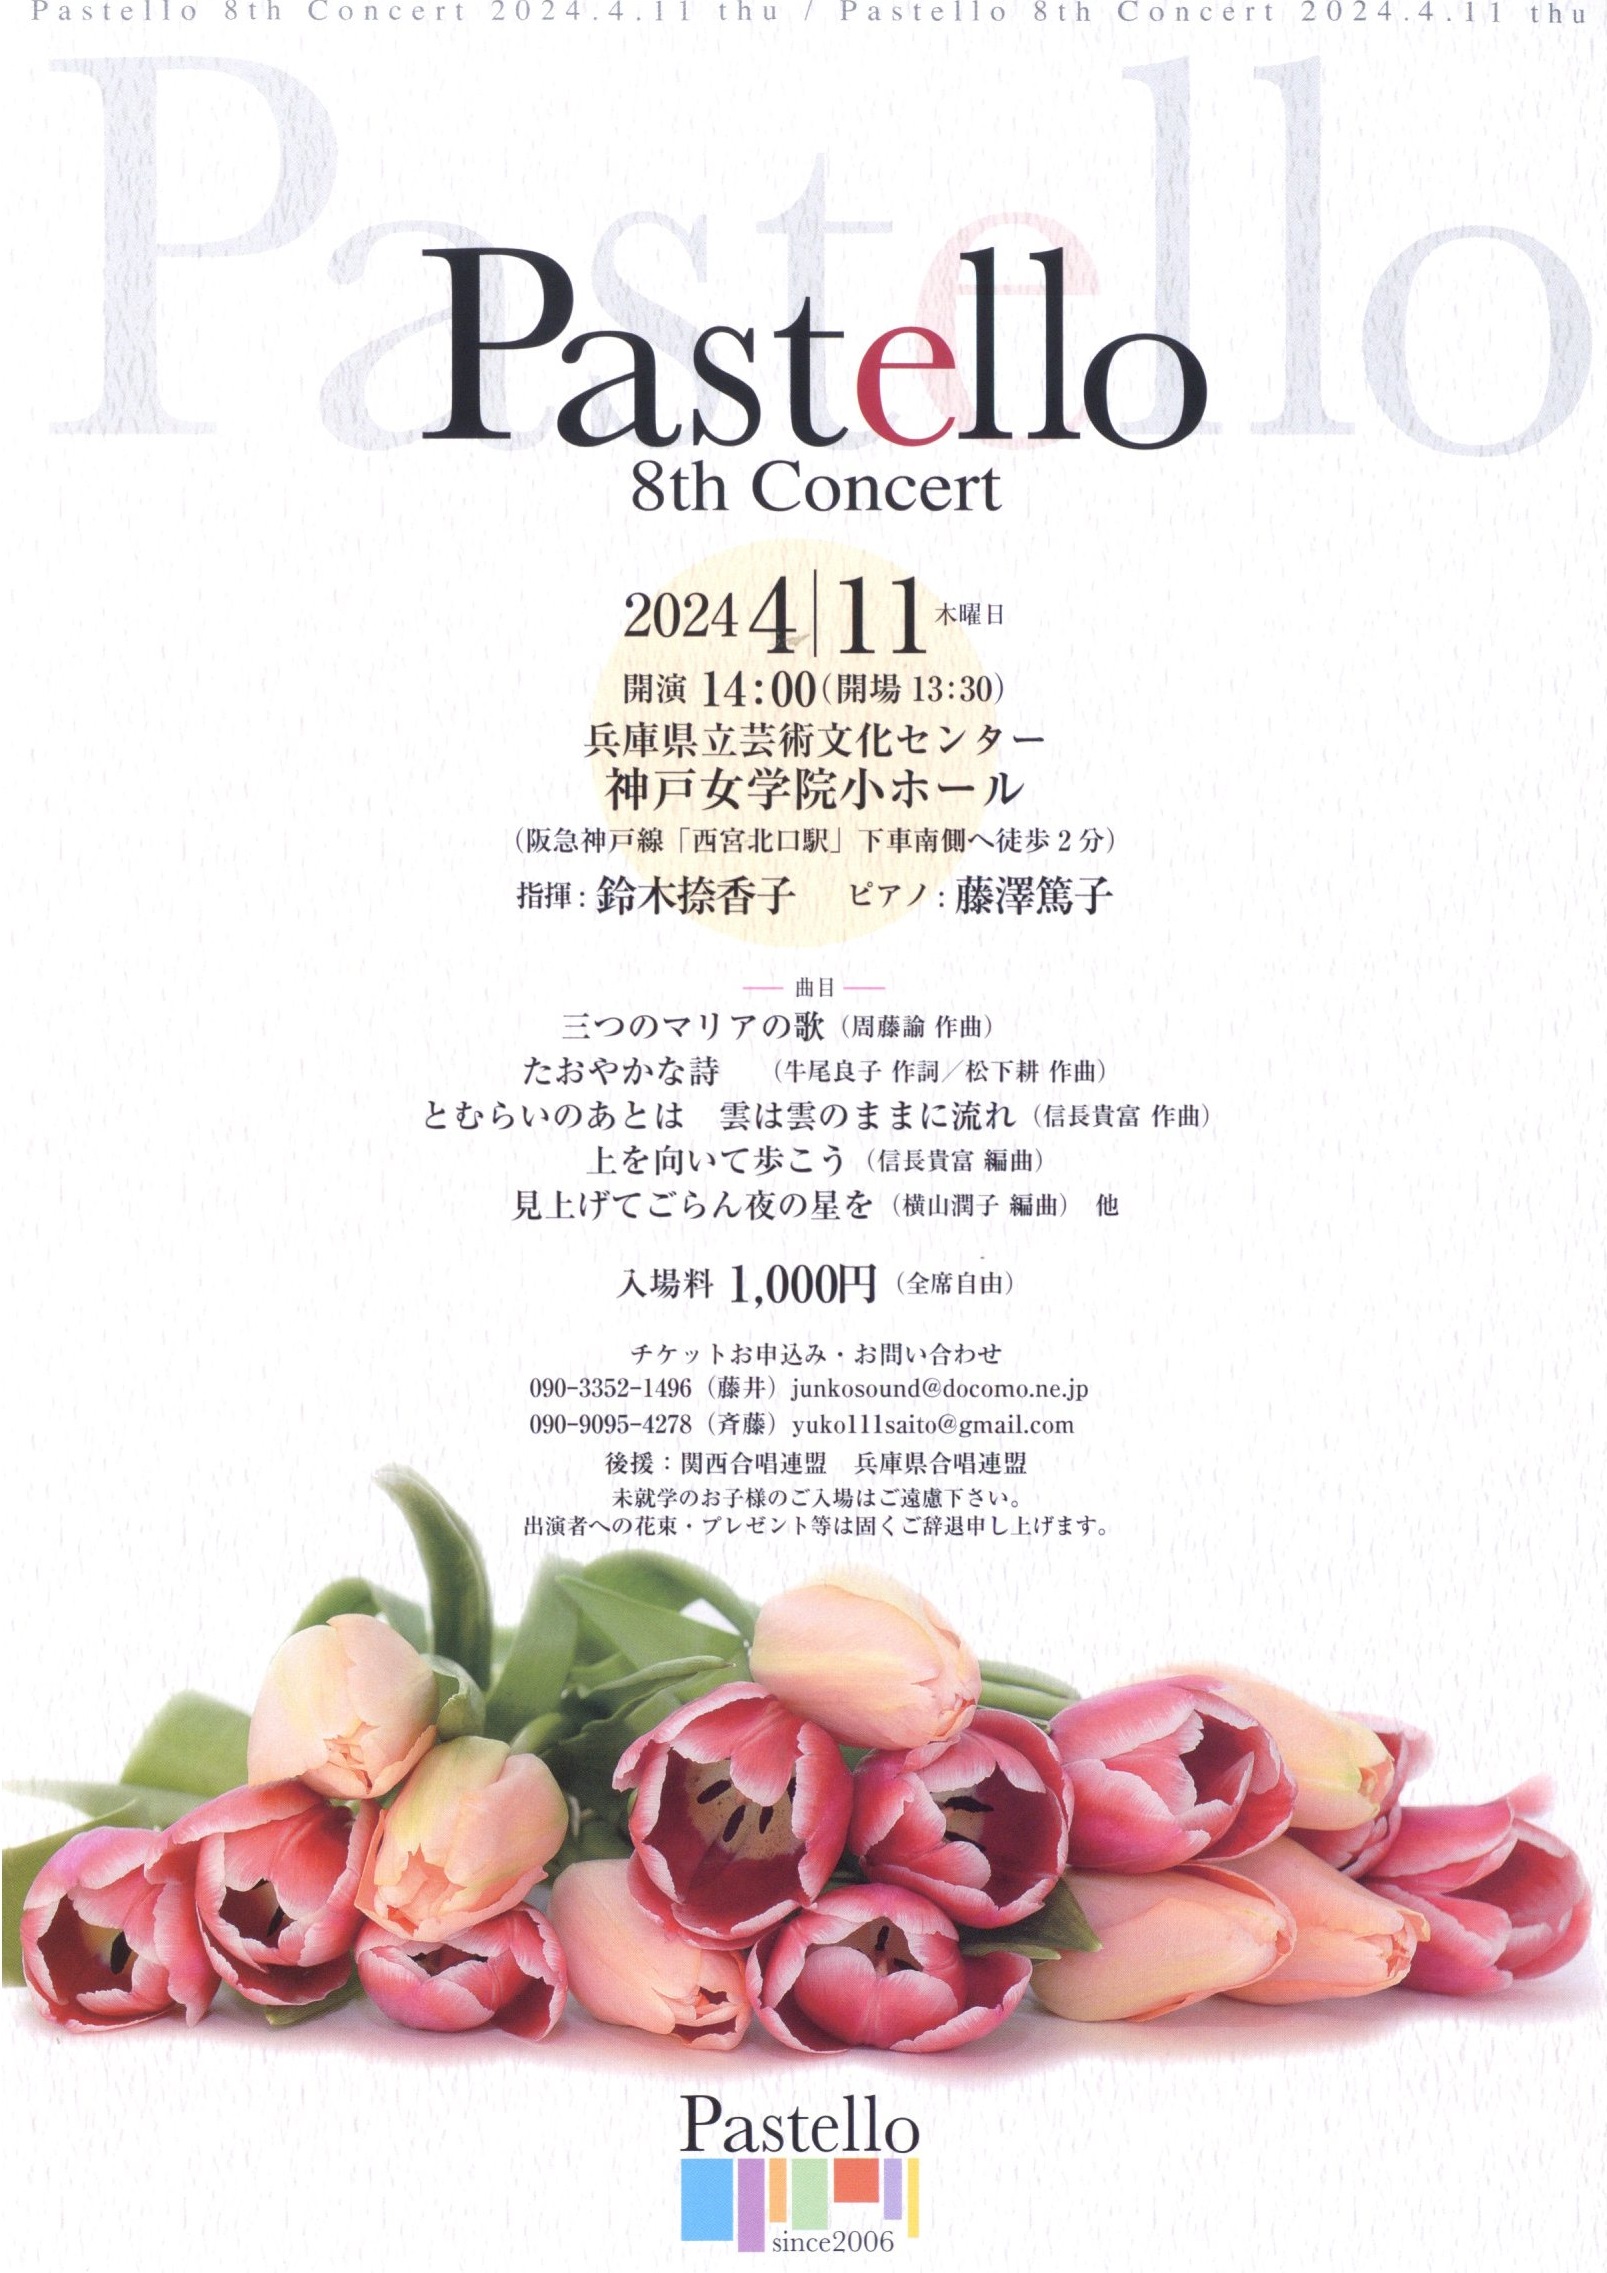 Pastello 8th Concert